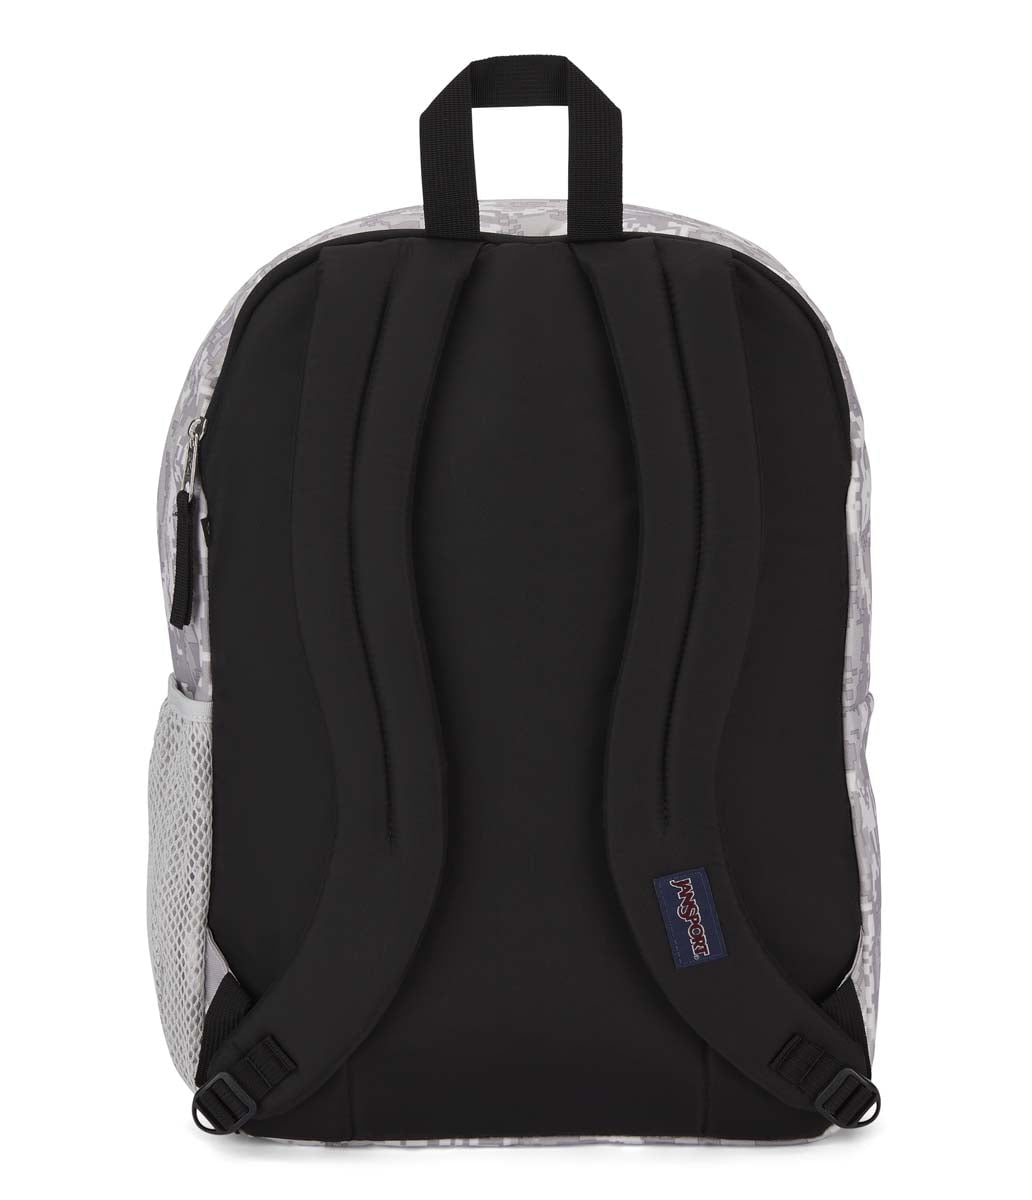 JanSport Big Student Backpack - 8 Bit Camo